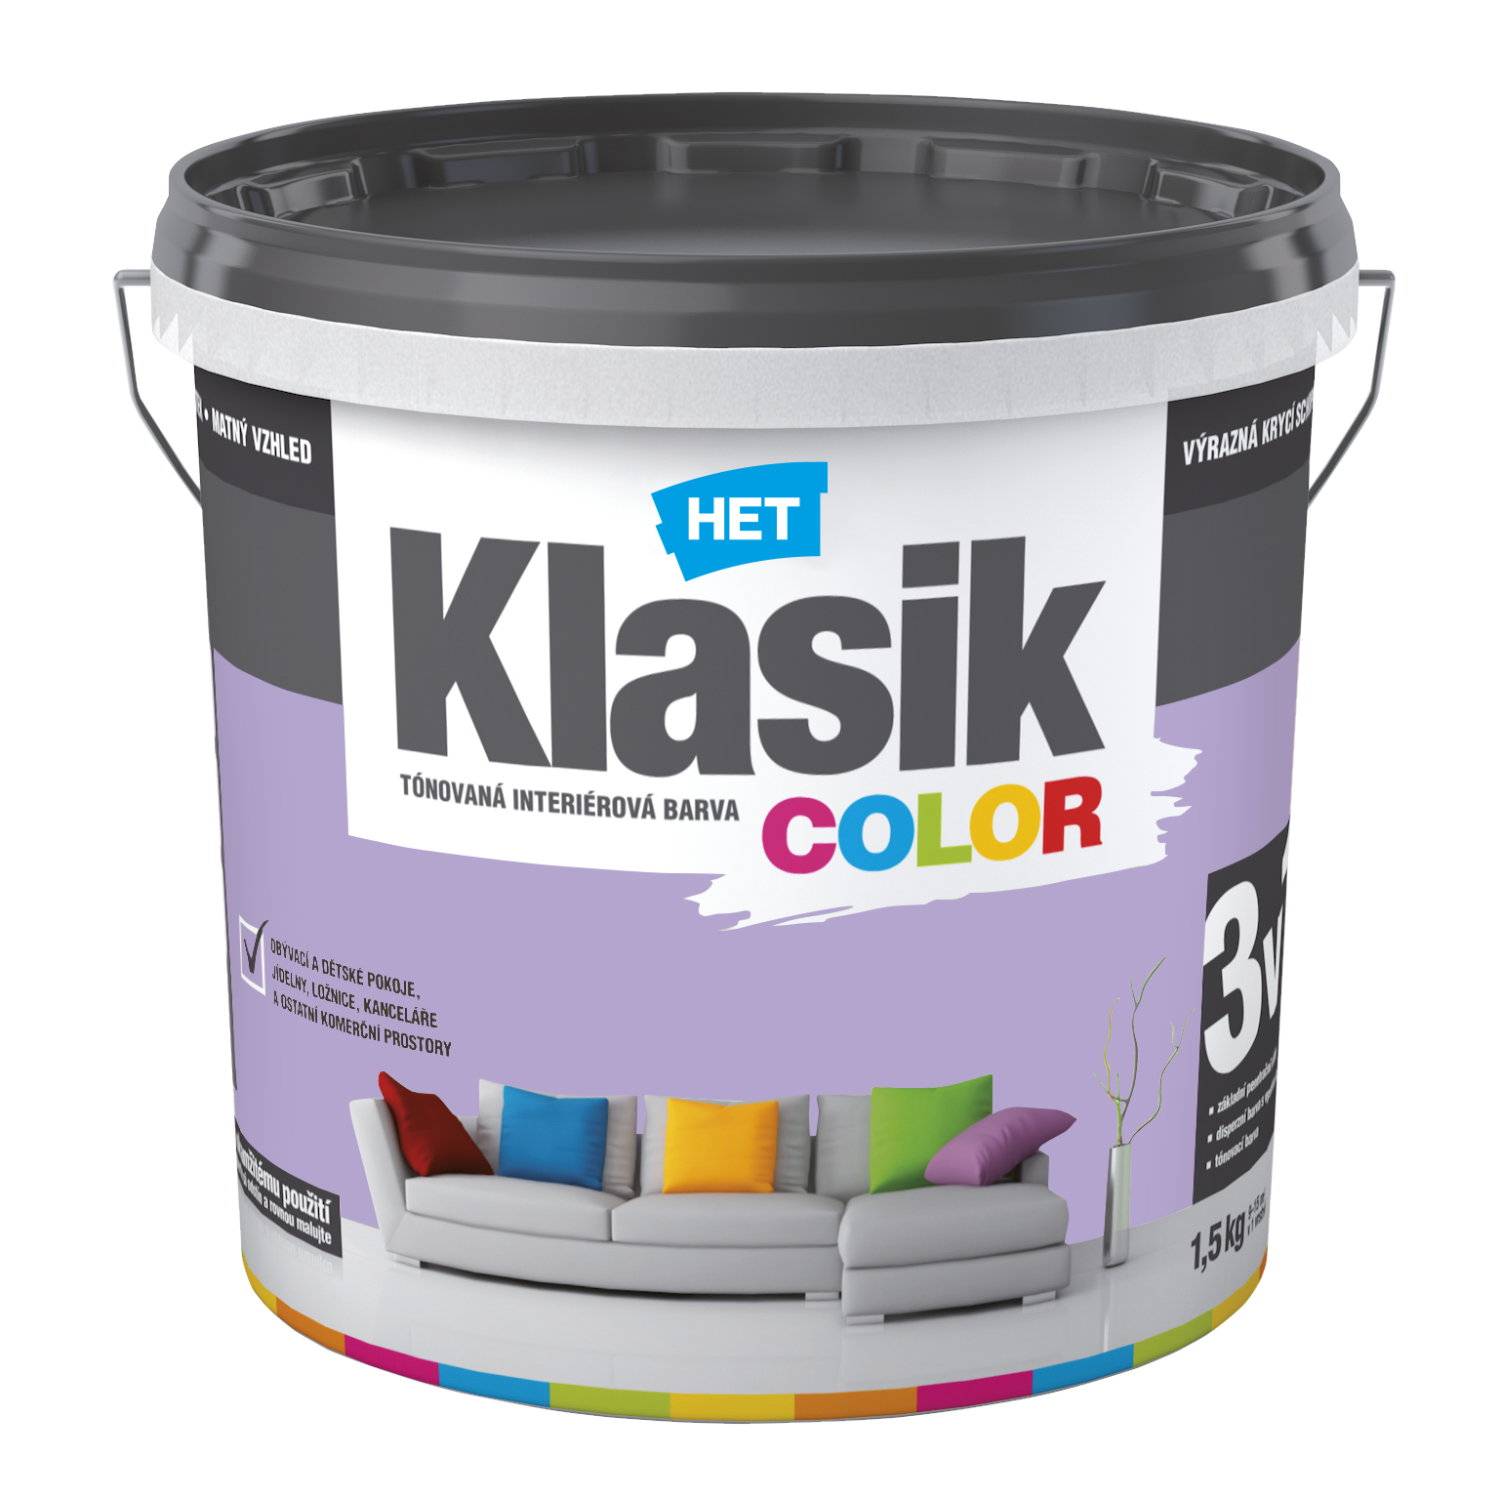 HET Klasik COLOR tónovaná interiérová akrylátová disperzná oteruvzdorná farba 1,5 kg, KC0327 - fialový lila